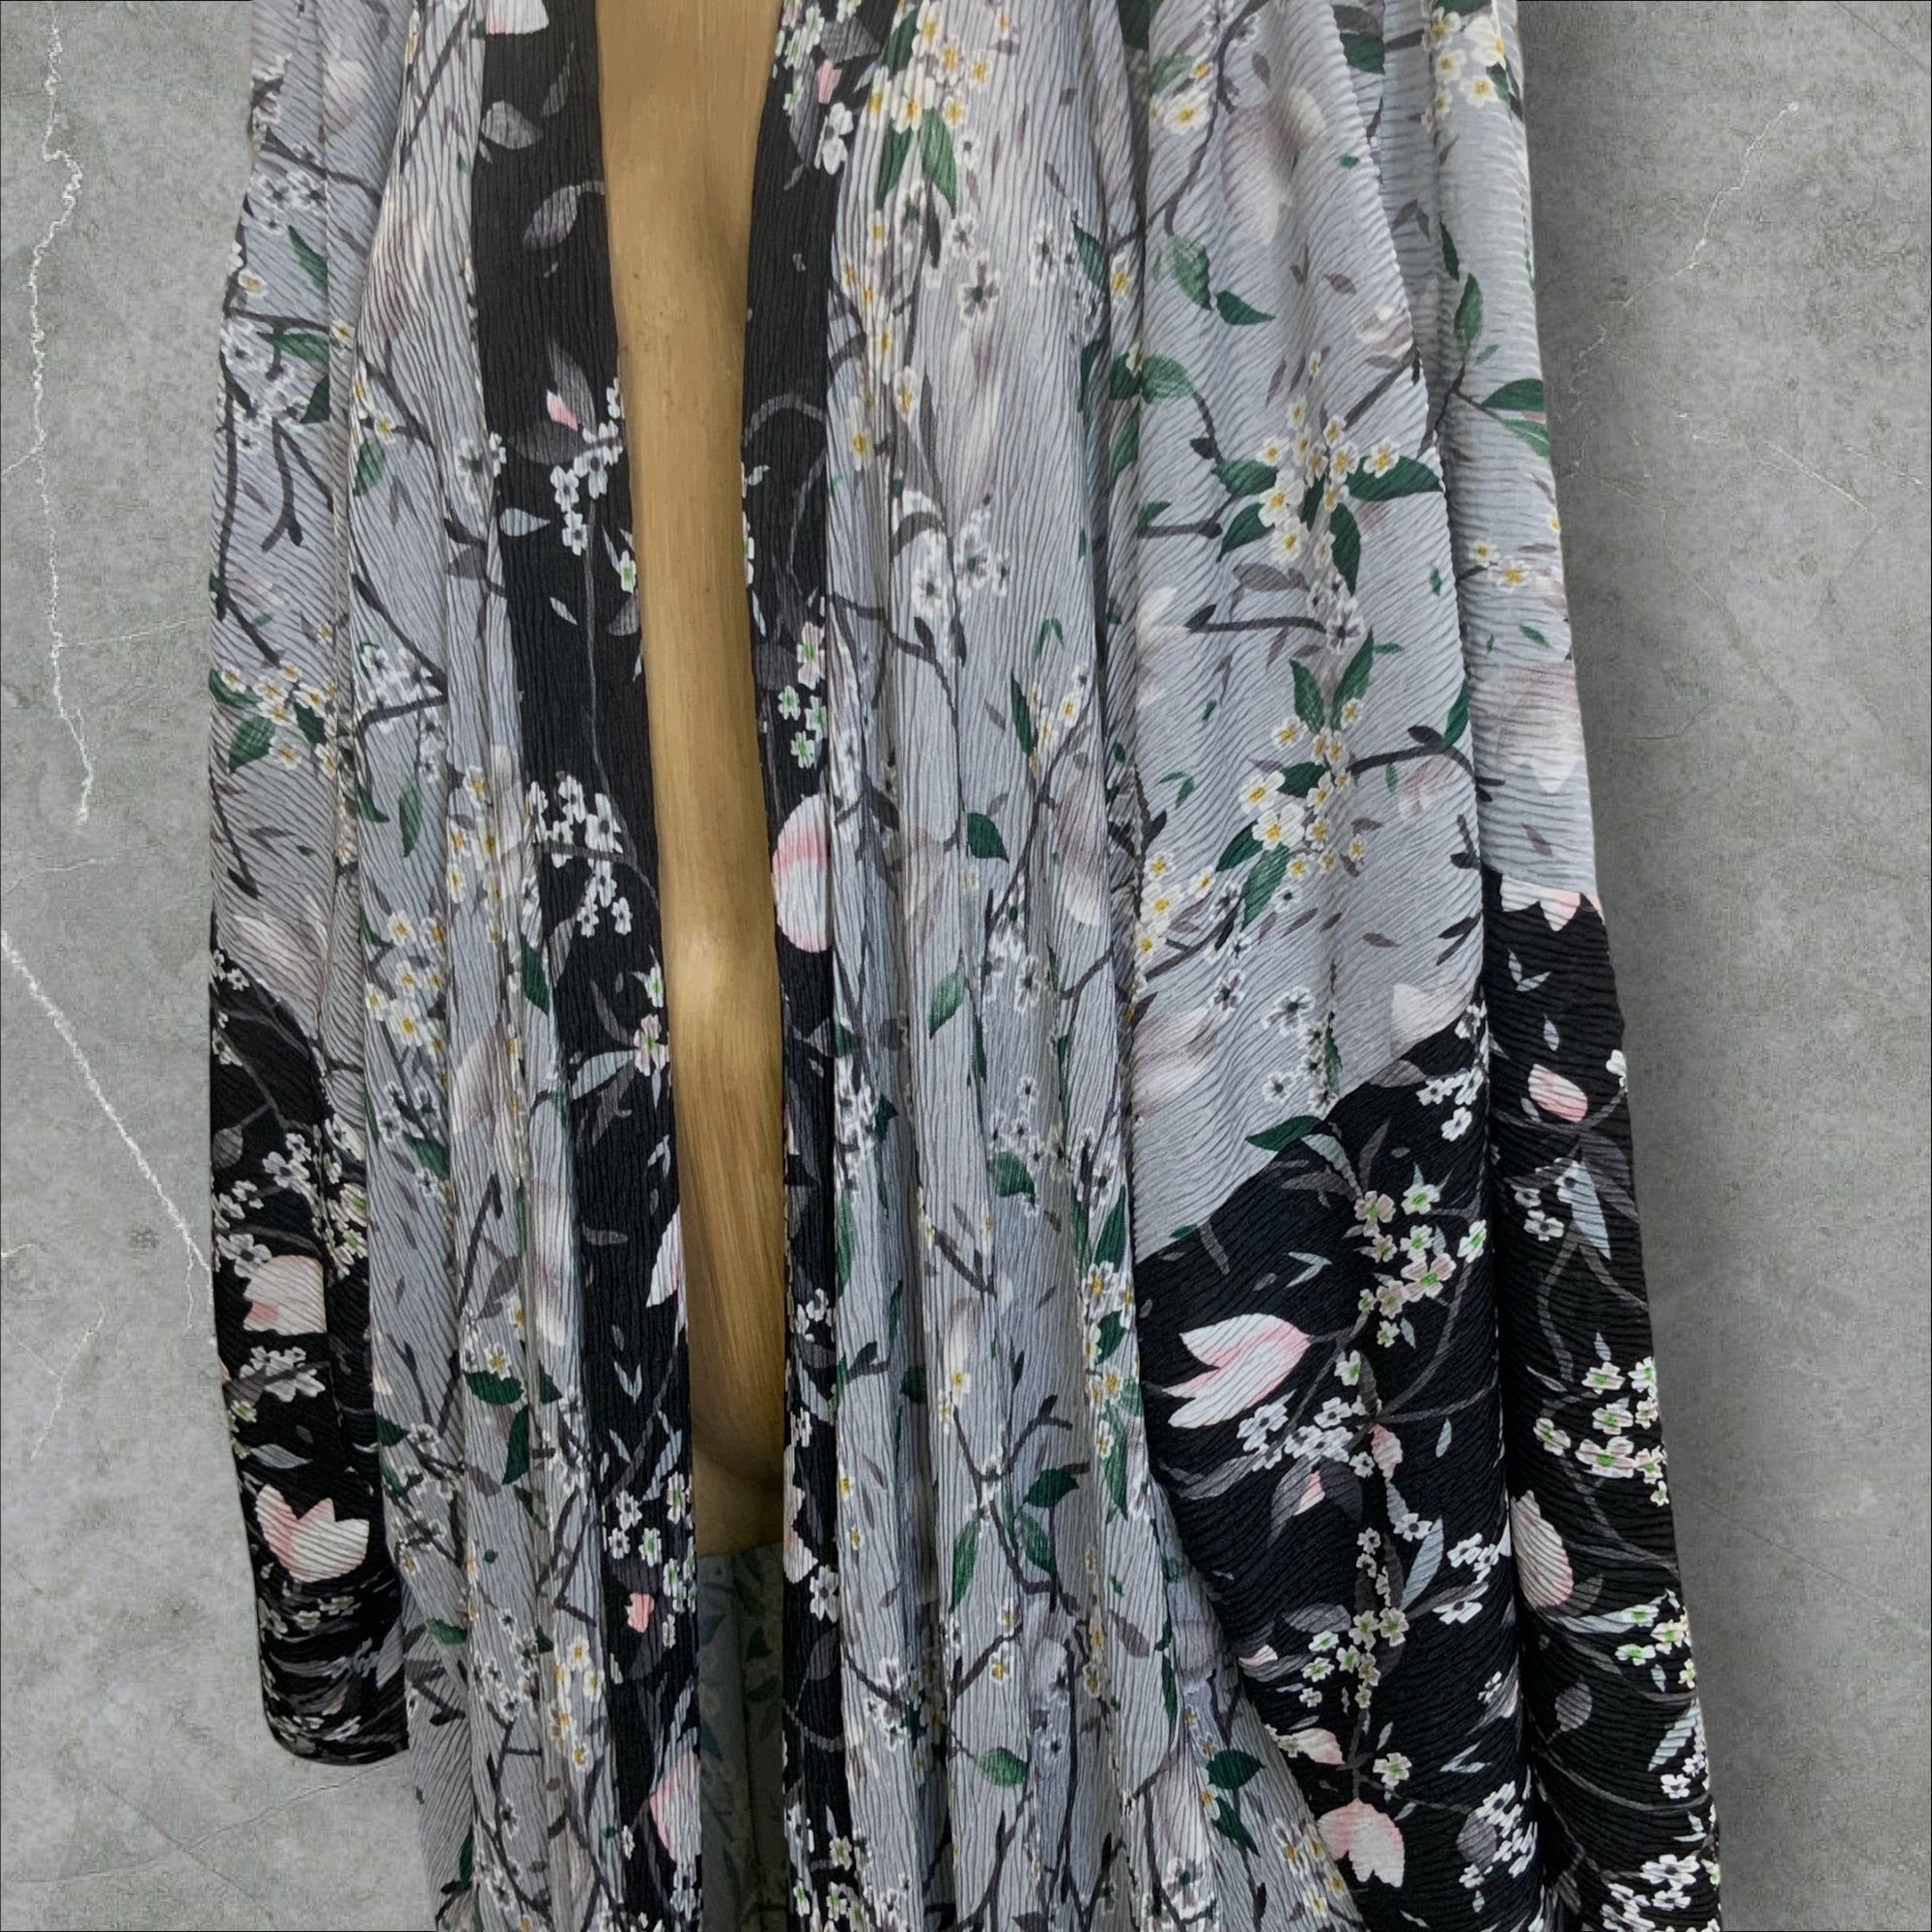 SARA Kimono Jacket Black/Blue-Grey Crinkled Poly Floral cover Up - Size 4XL